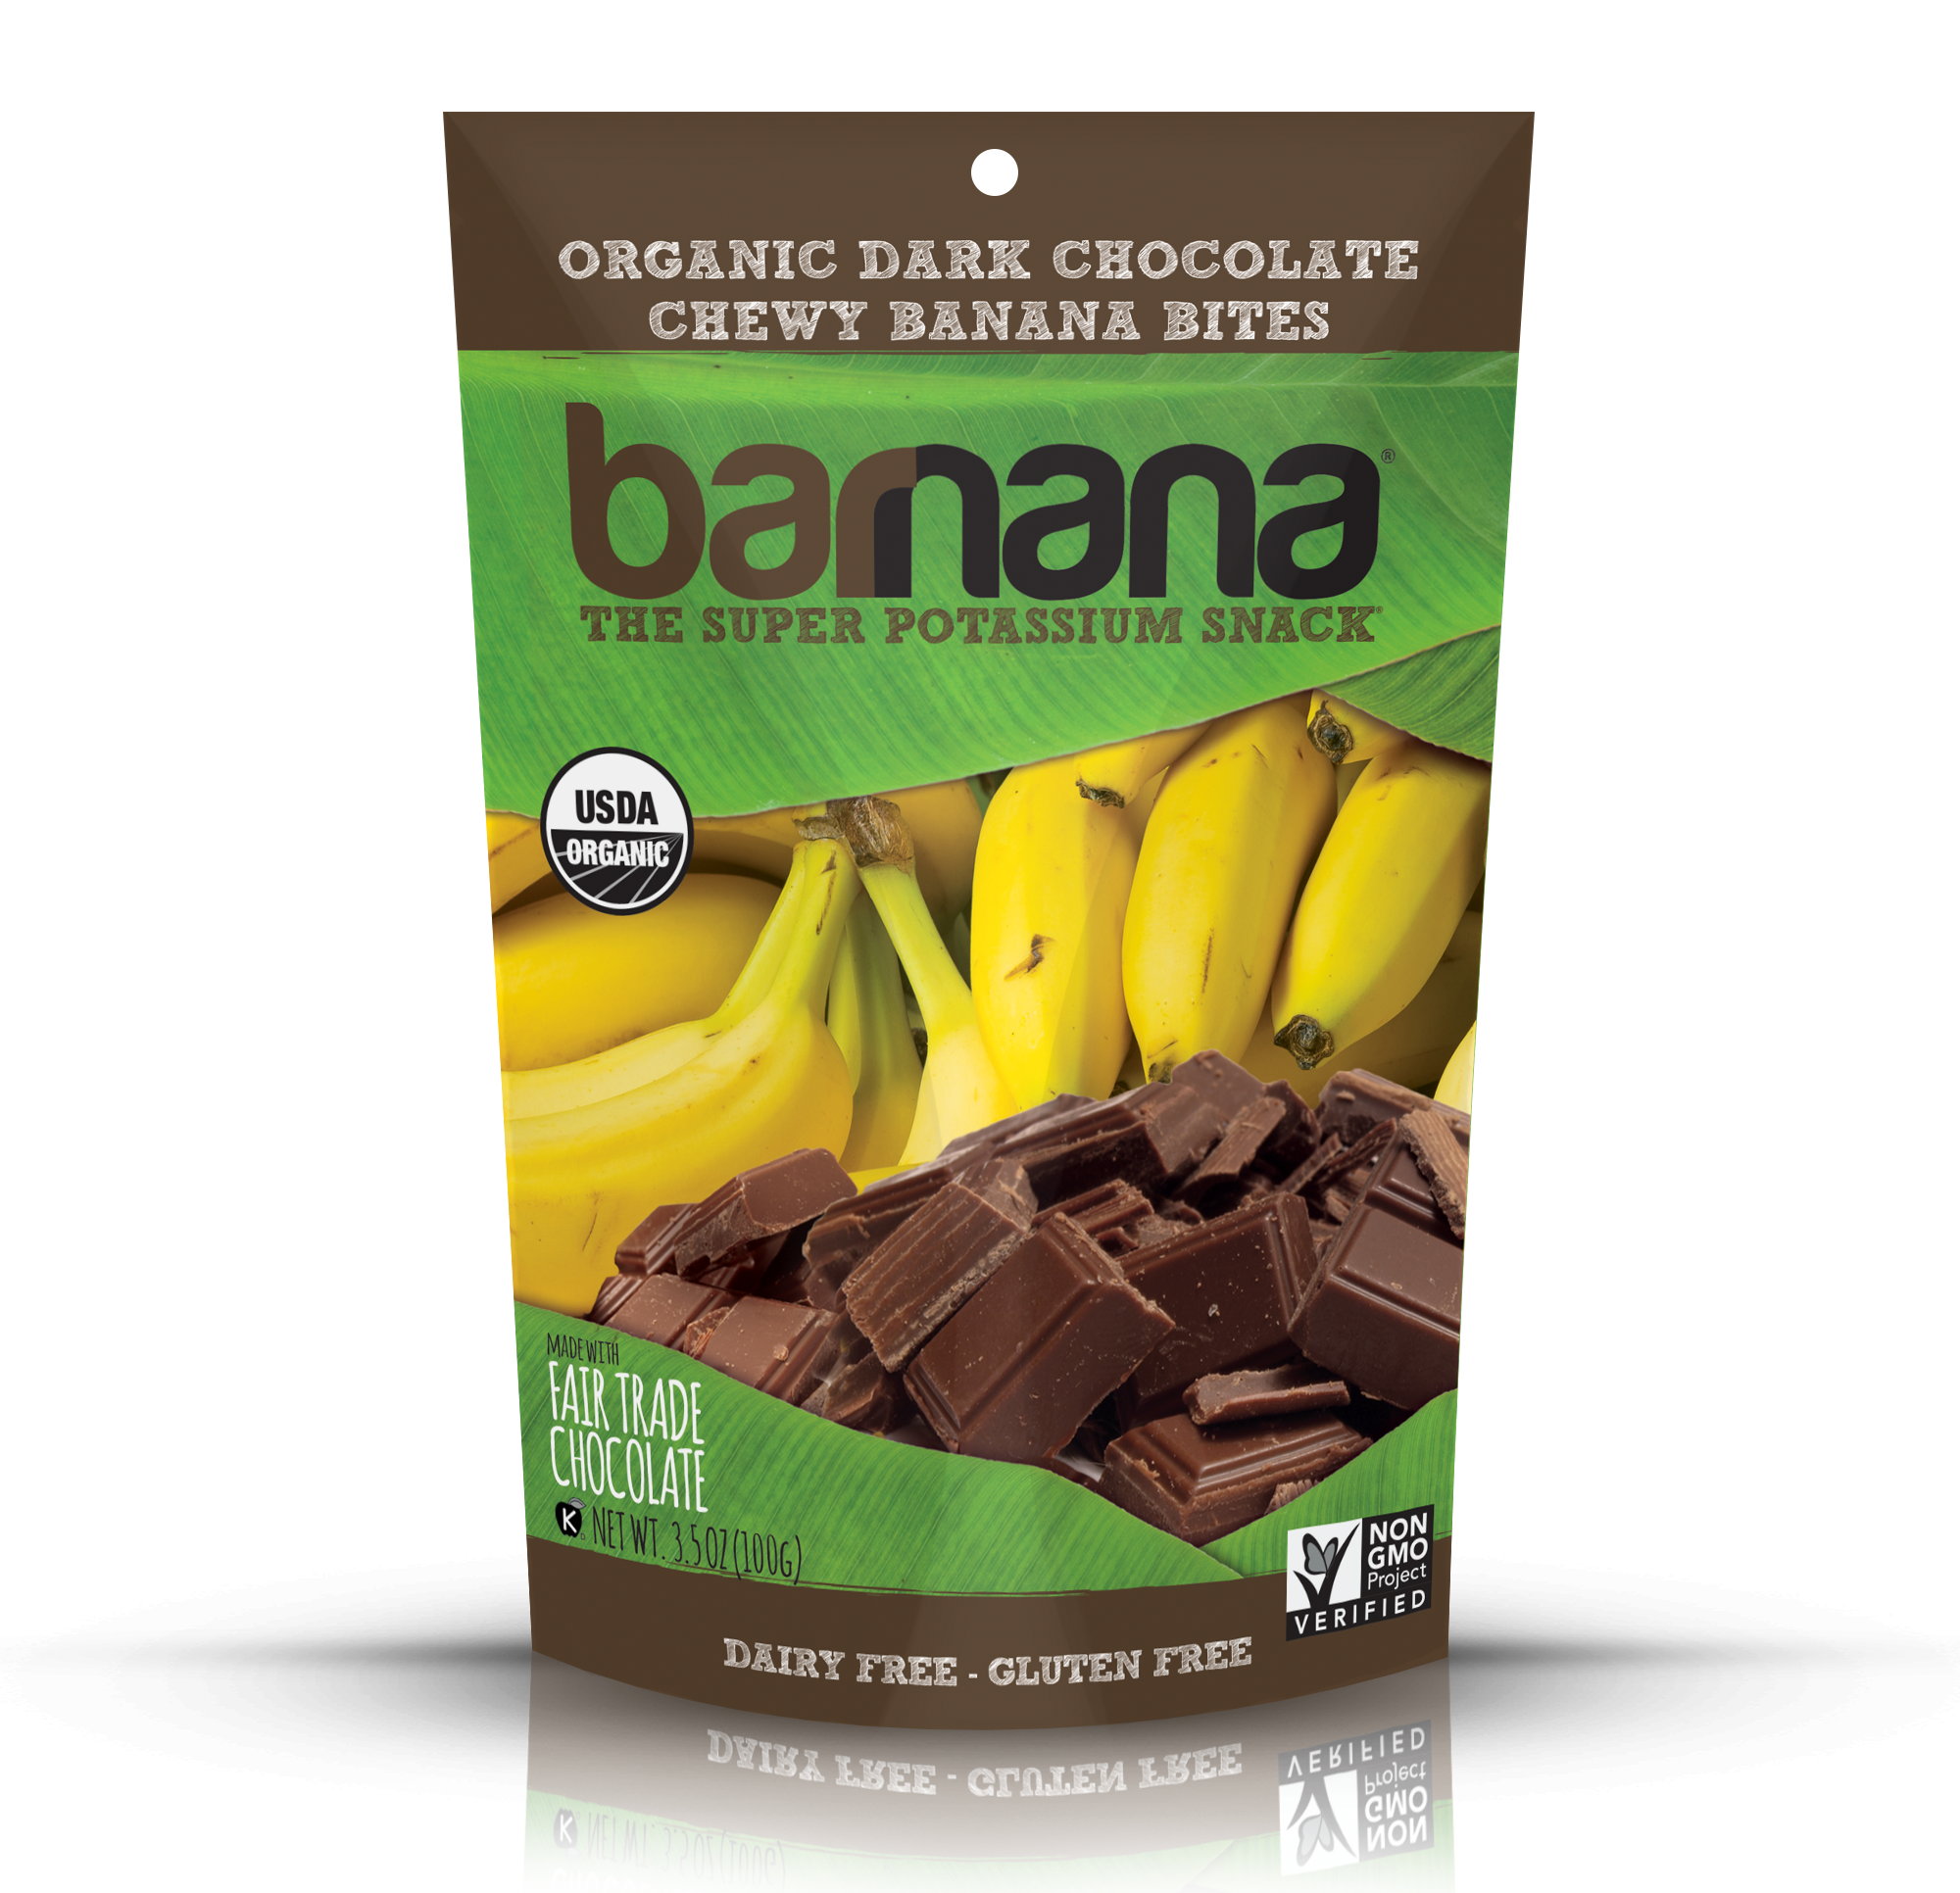 Barnana Organic Chewy Banana Bits | Mommy Runs It